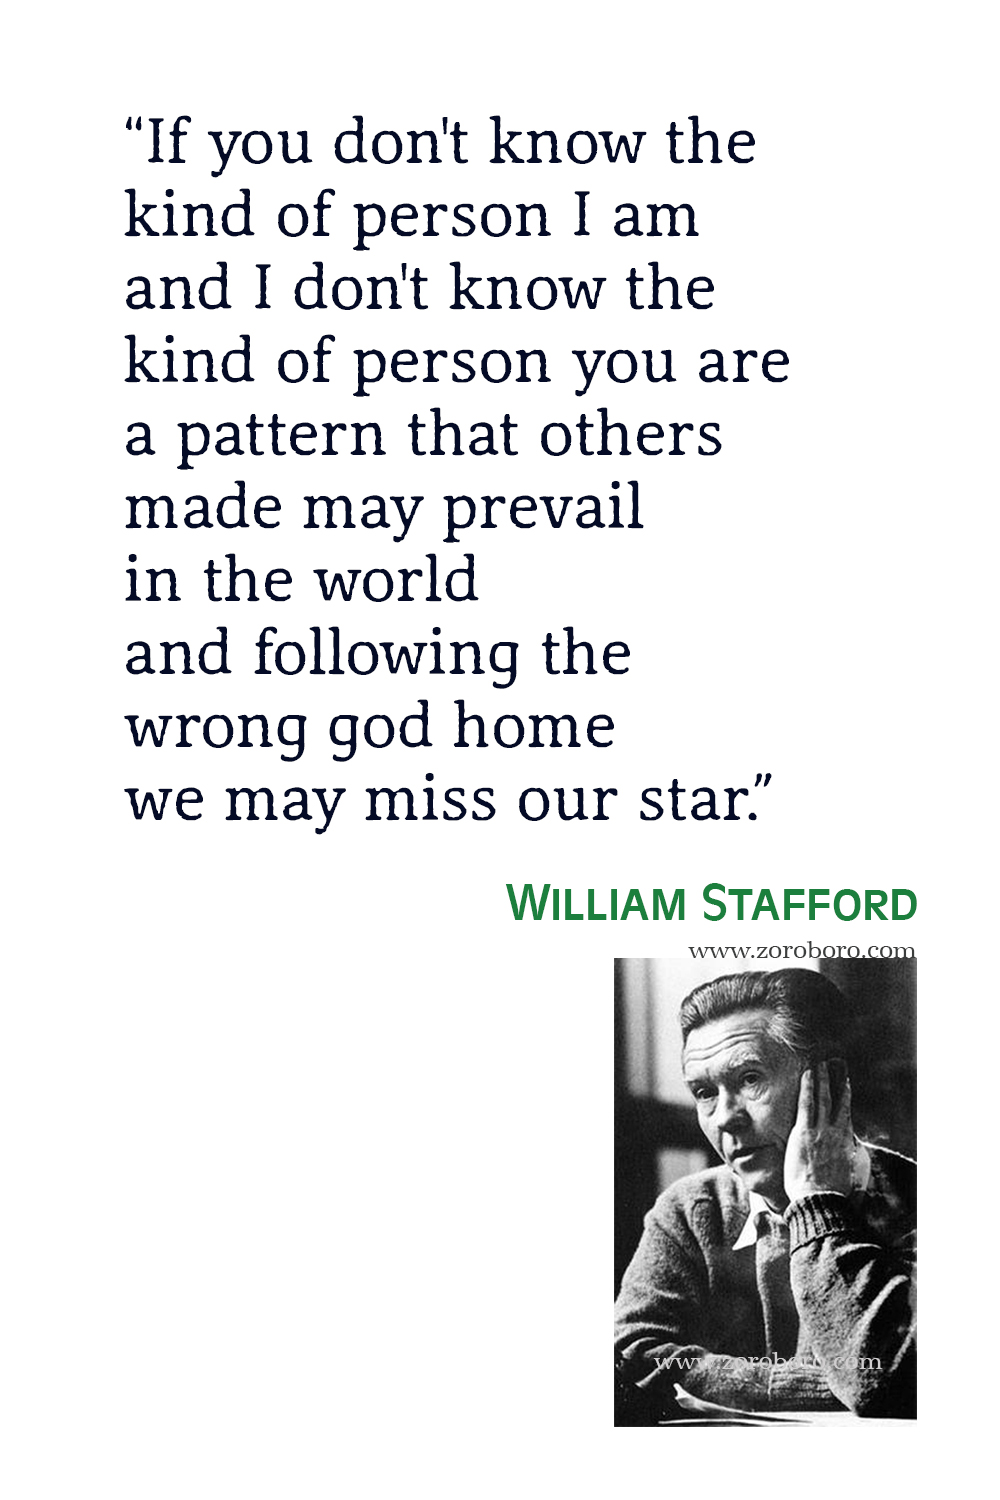 William Stafford Quotes, William Stafford Poems, William Stafford Poetry, William Stafford Books Quotes, William Stafford Selected Poems.William Stafford Art